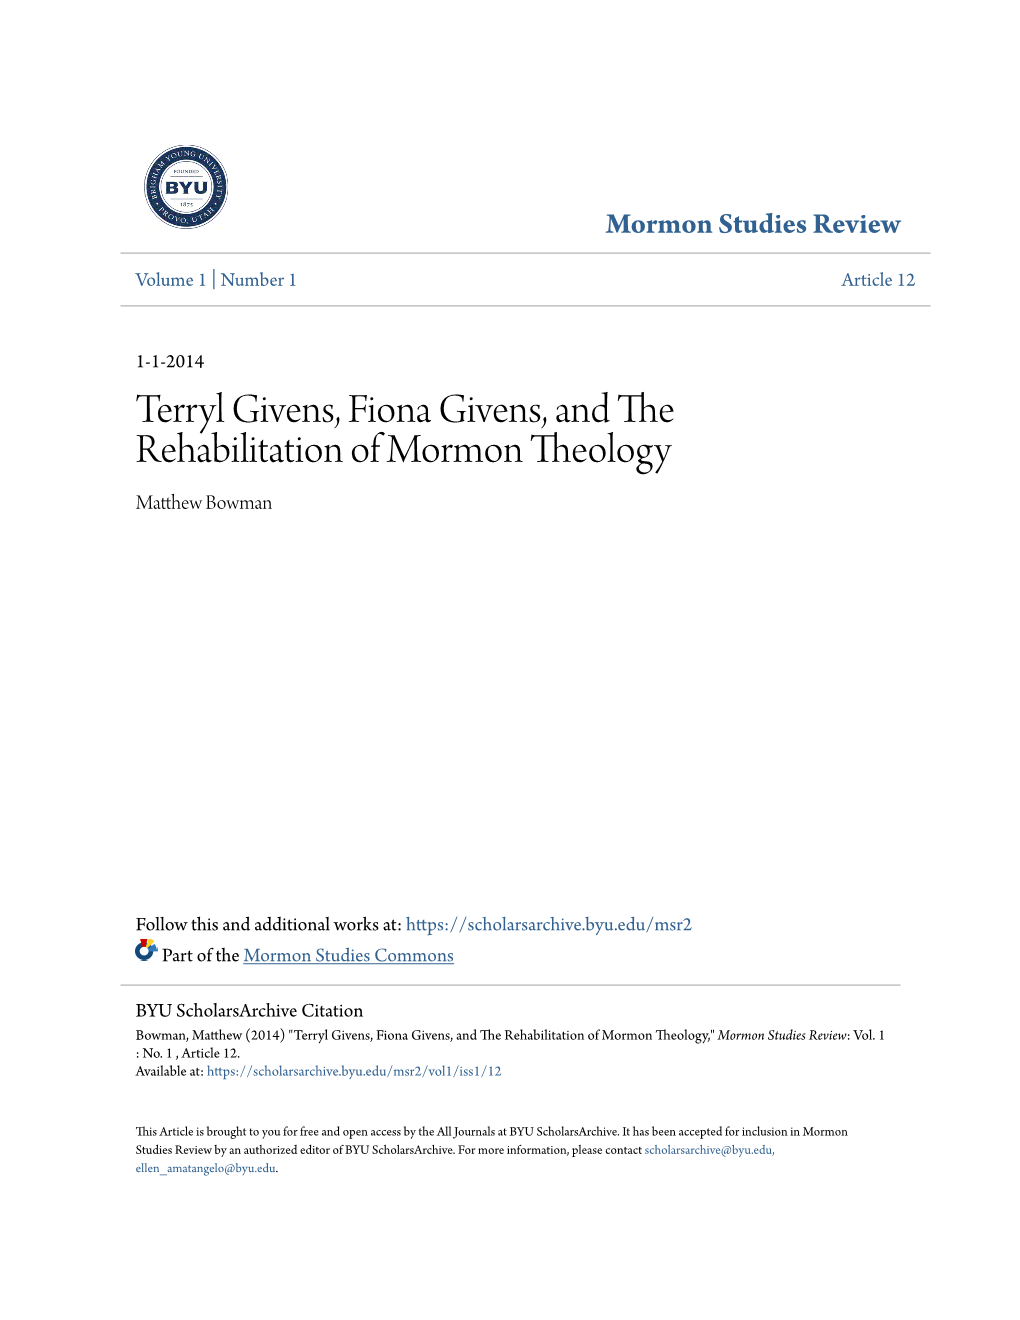 Terryl Givens, Fiona Givens, and the Rehabilitation of Mormon Theology Matthew Bowman